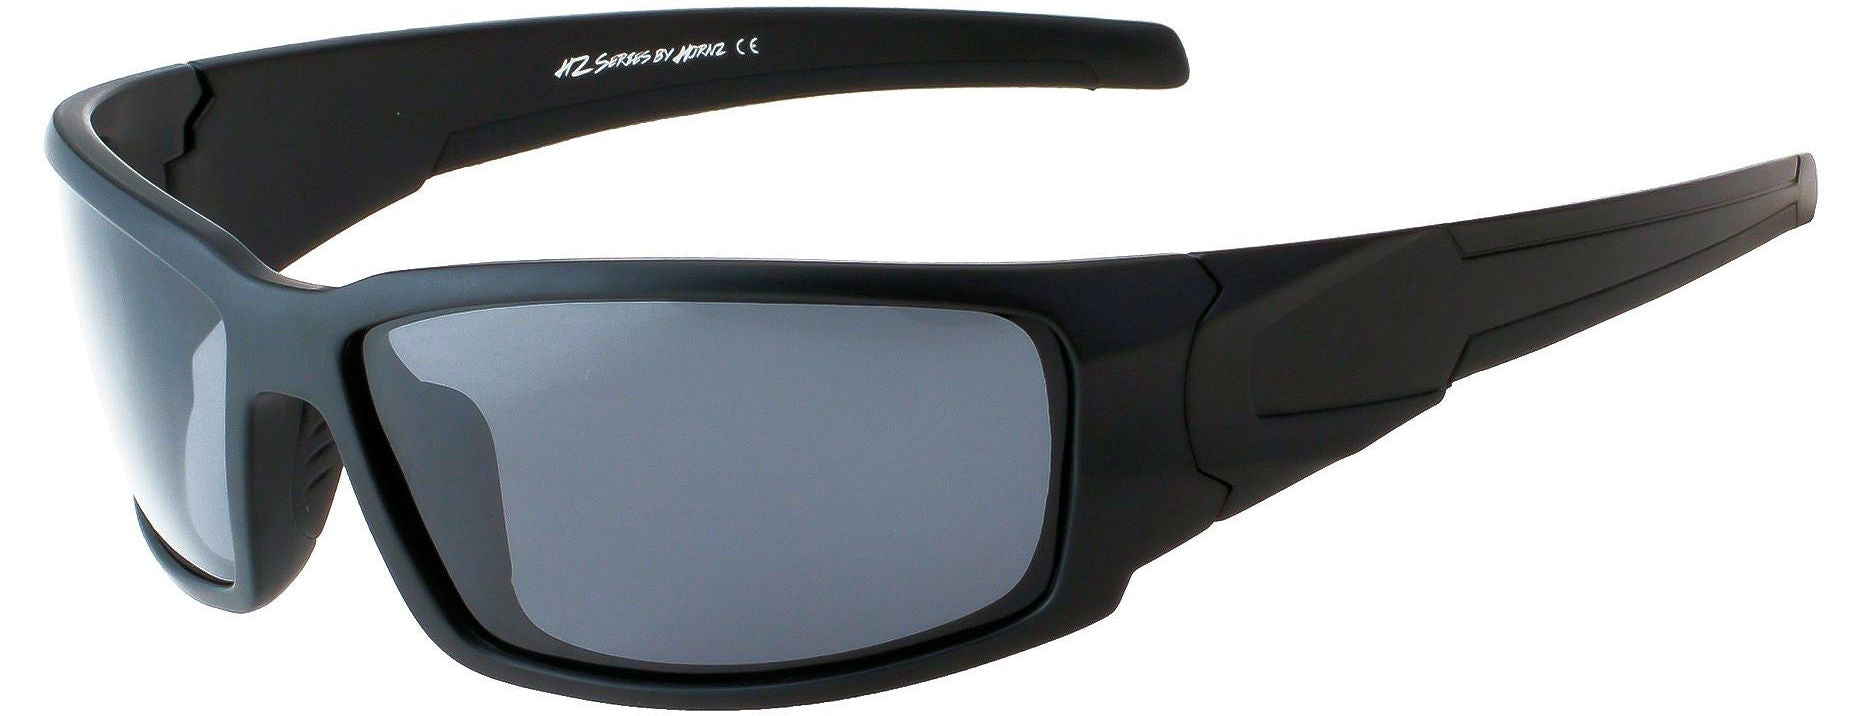 Main image: Polarized Sunglasses for Men - Premium Sport Sunglasses - HZ Series Aquabull - Black Frame - Dark Smoke Lens